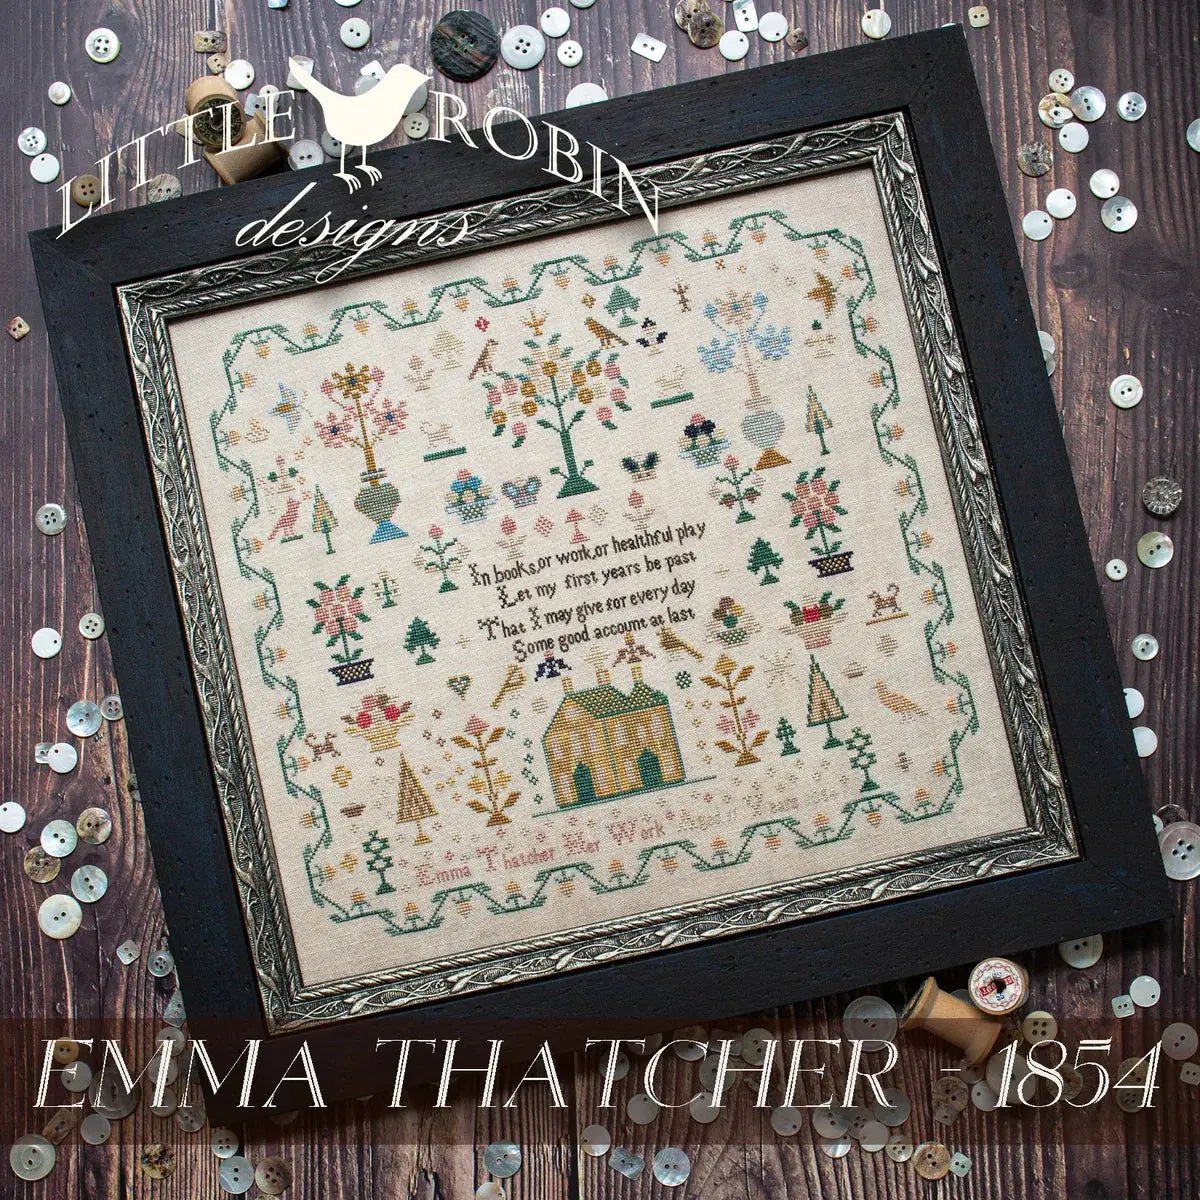 Emma Thatcher 1854 by Little Robin Designs, (Pre-order) Little Robin Designs